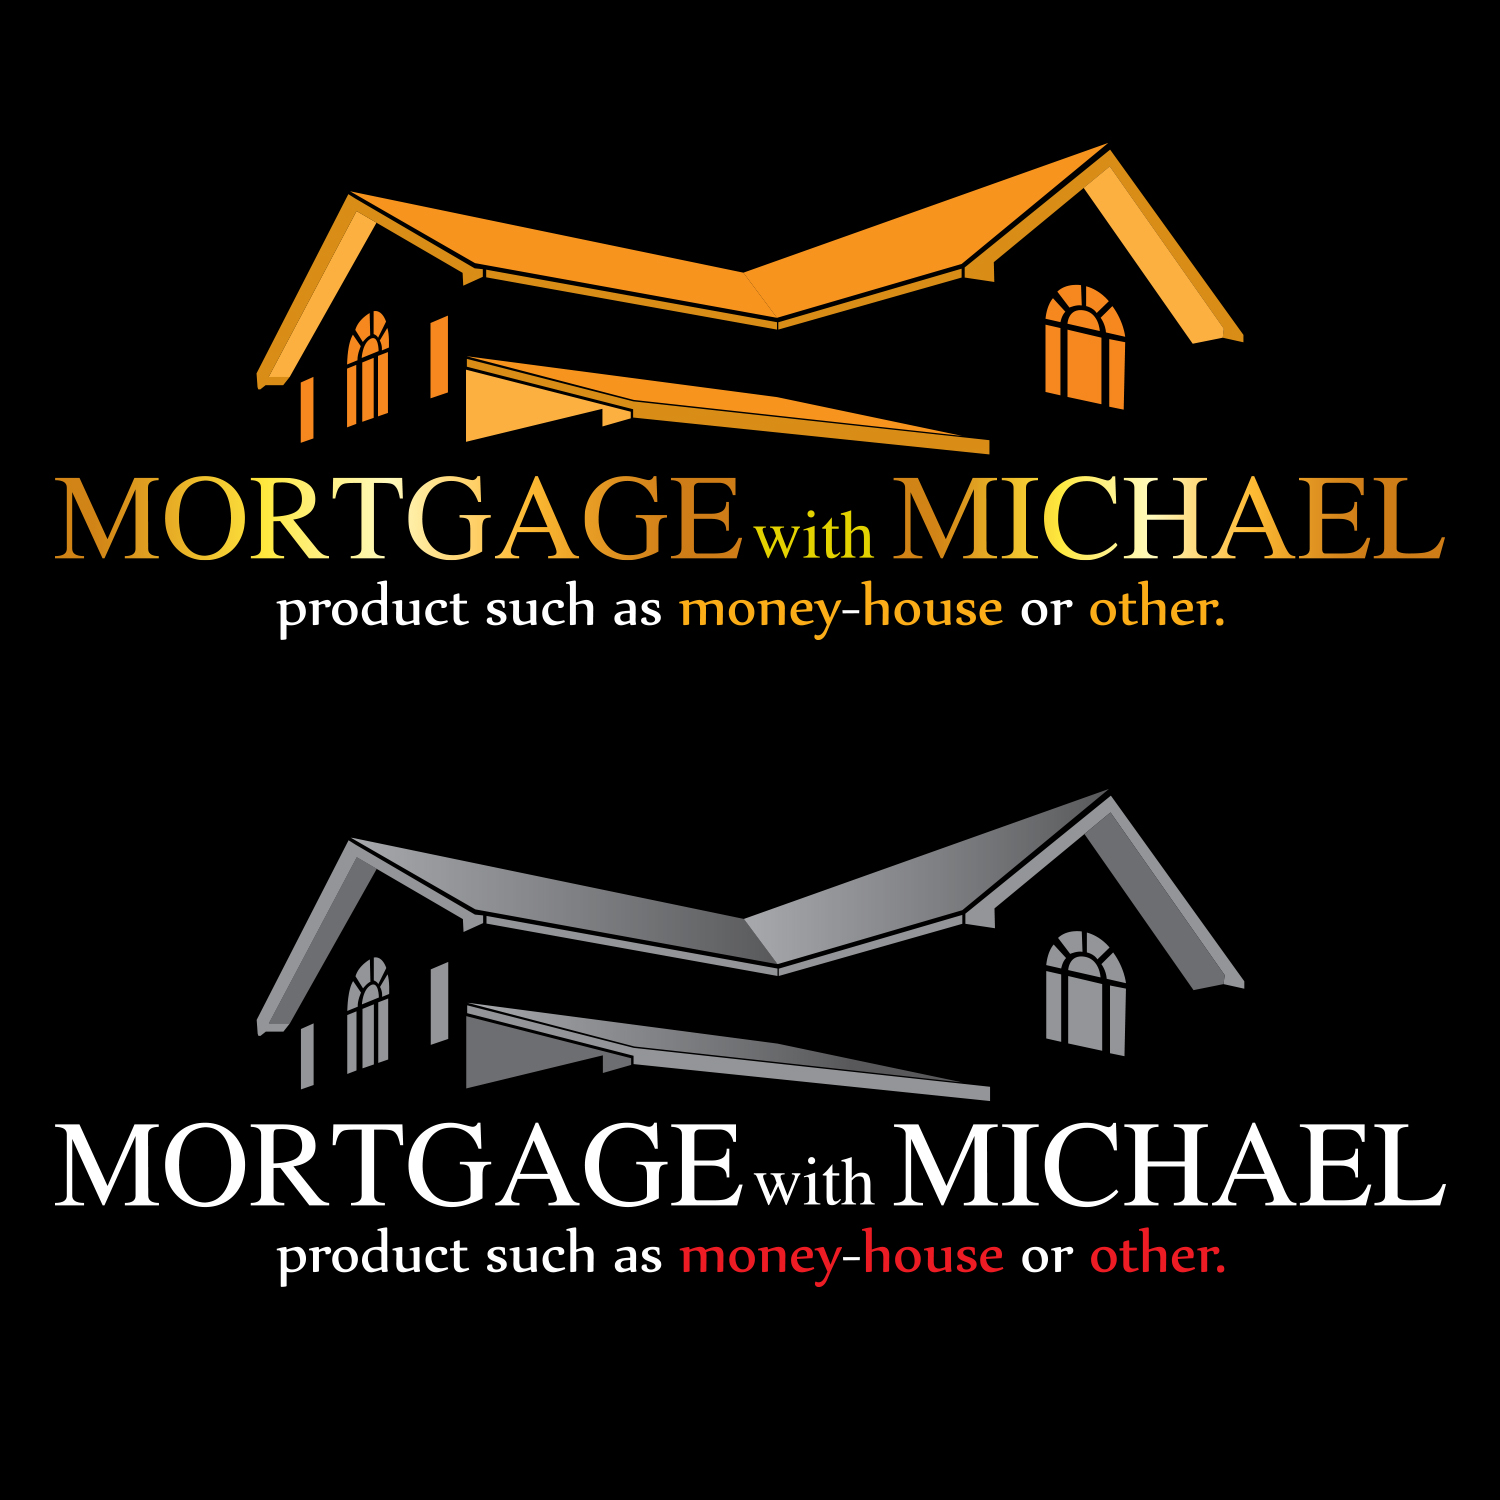 mortgage logo ideas 2